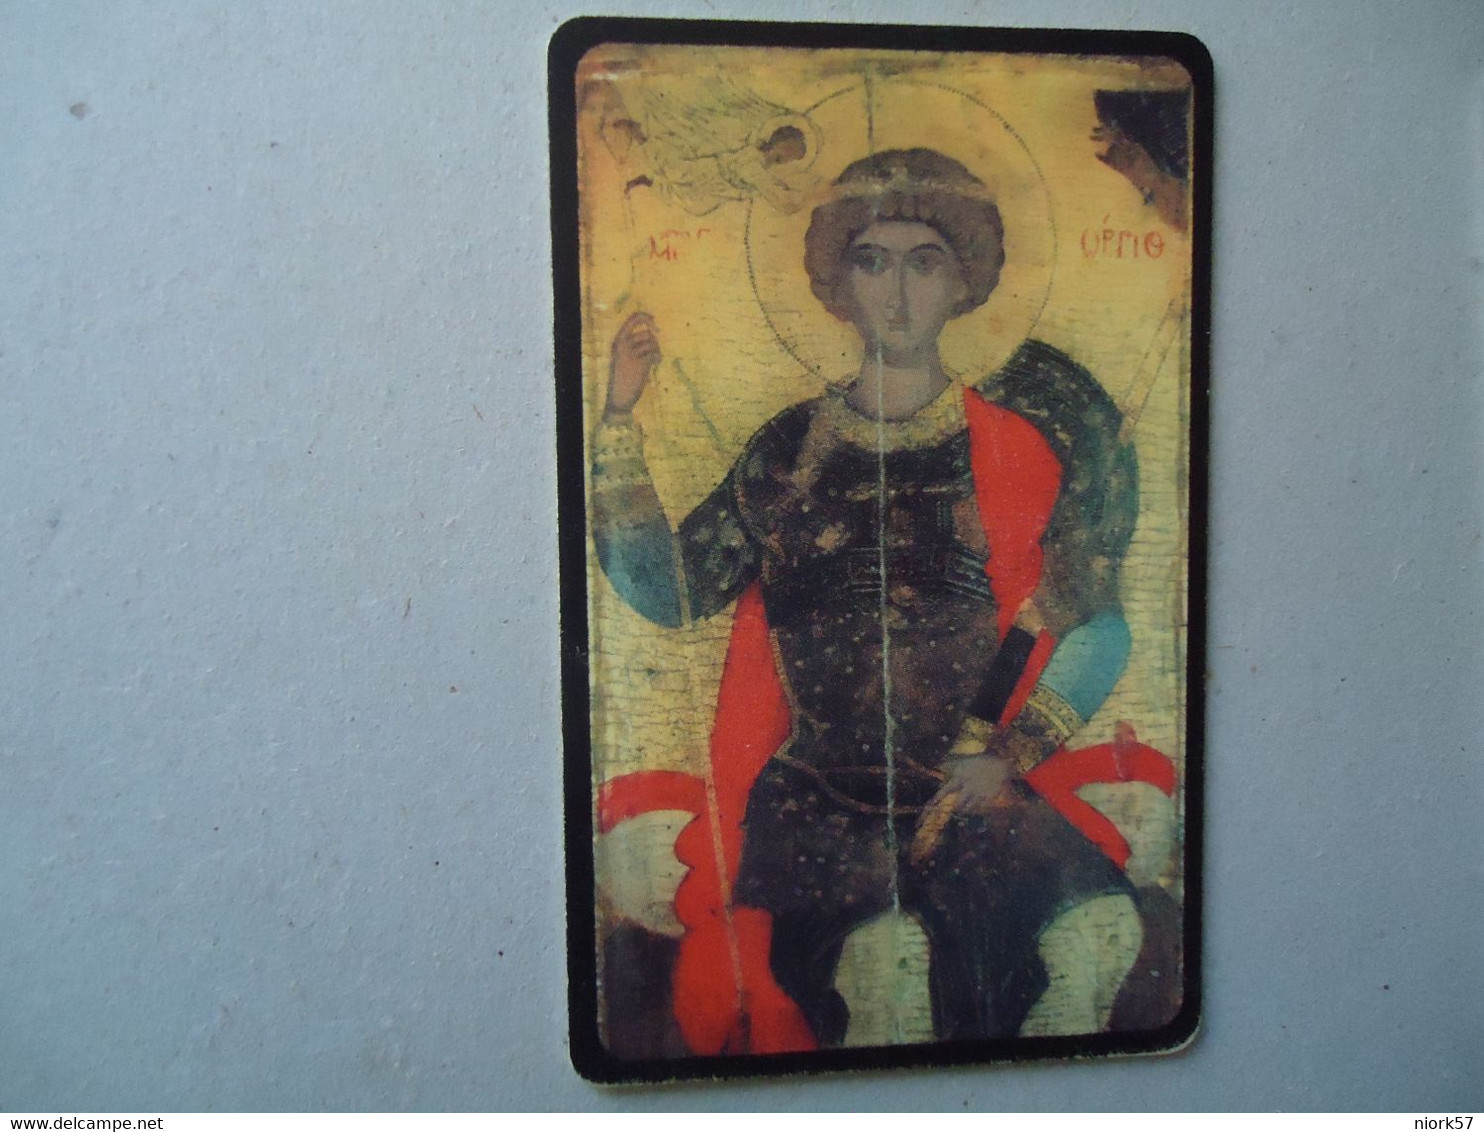 BULGARIA   USED   CARDS   PAINTING ST.GEORGE - Pittura